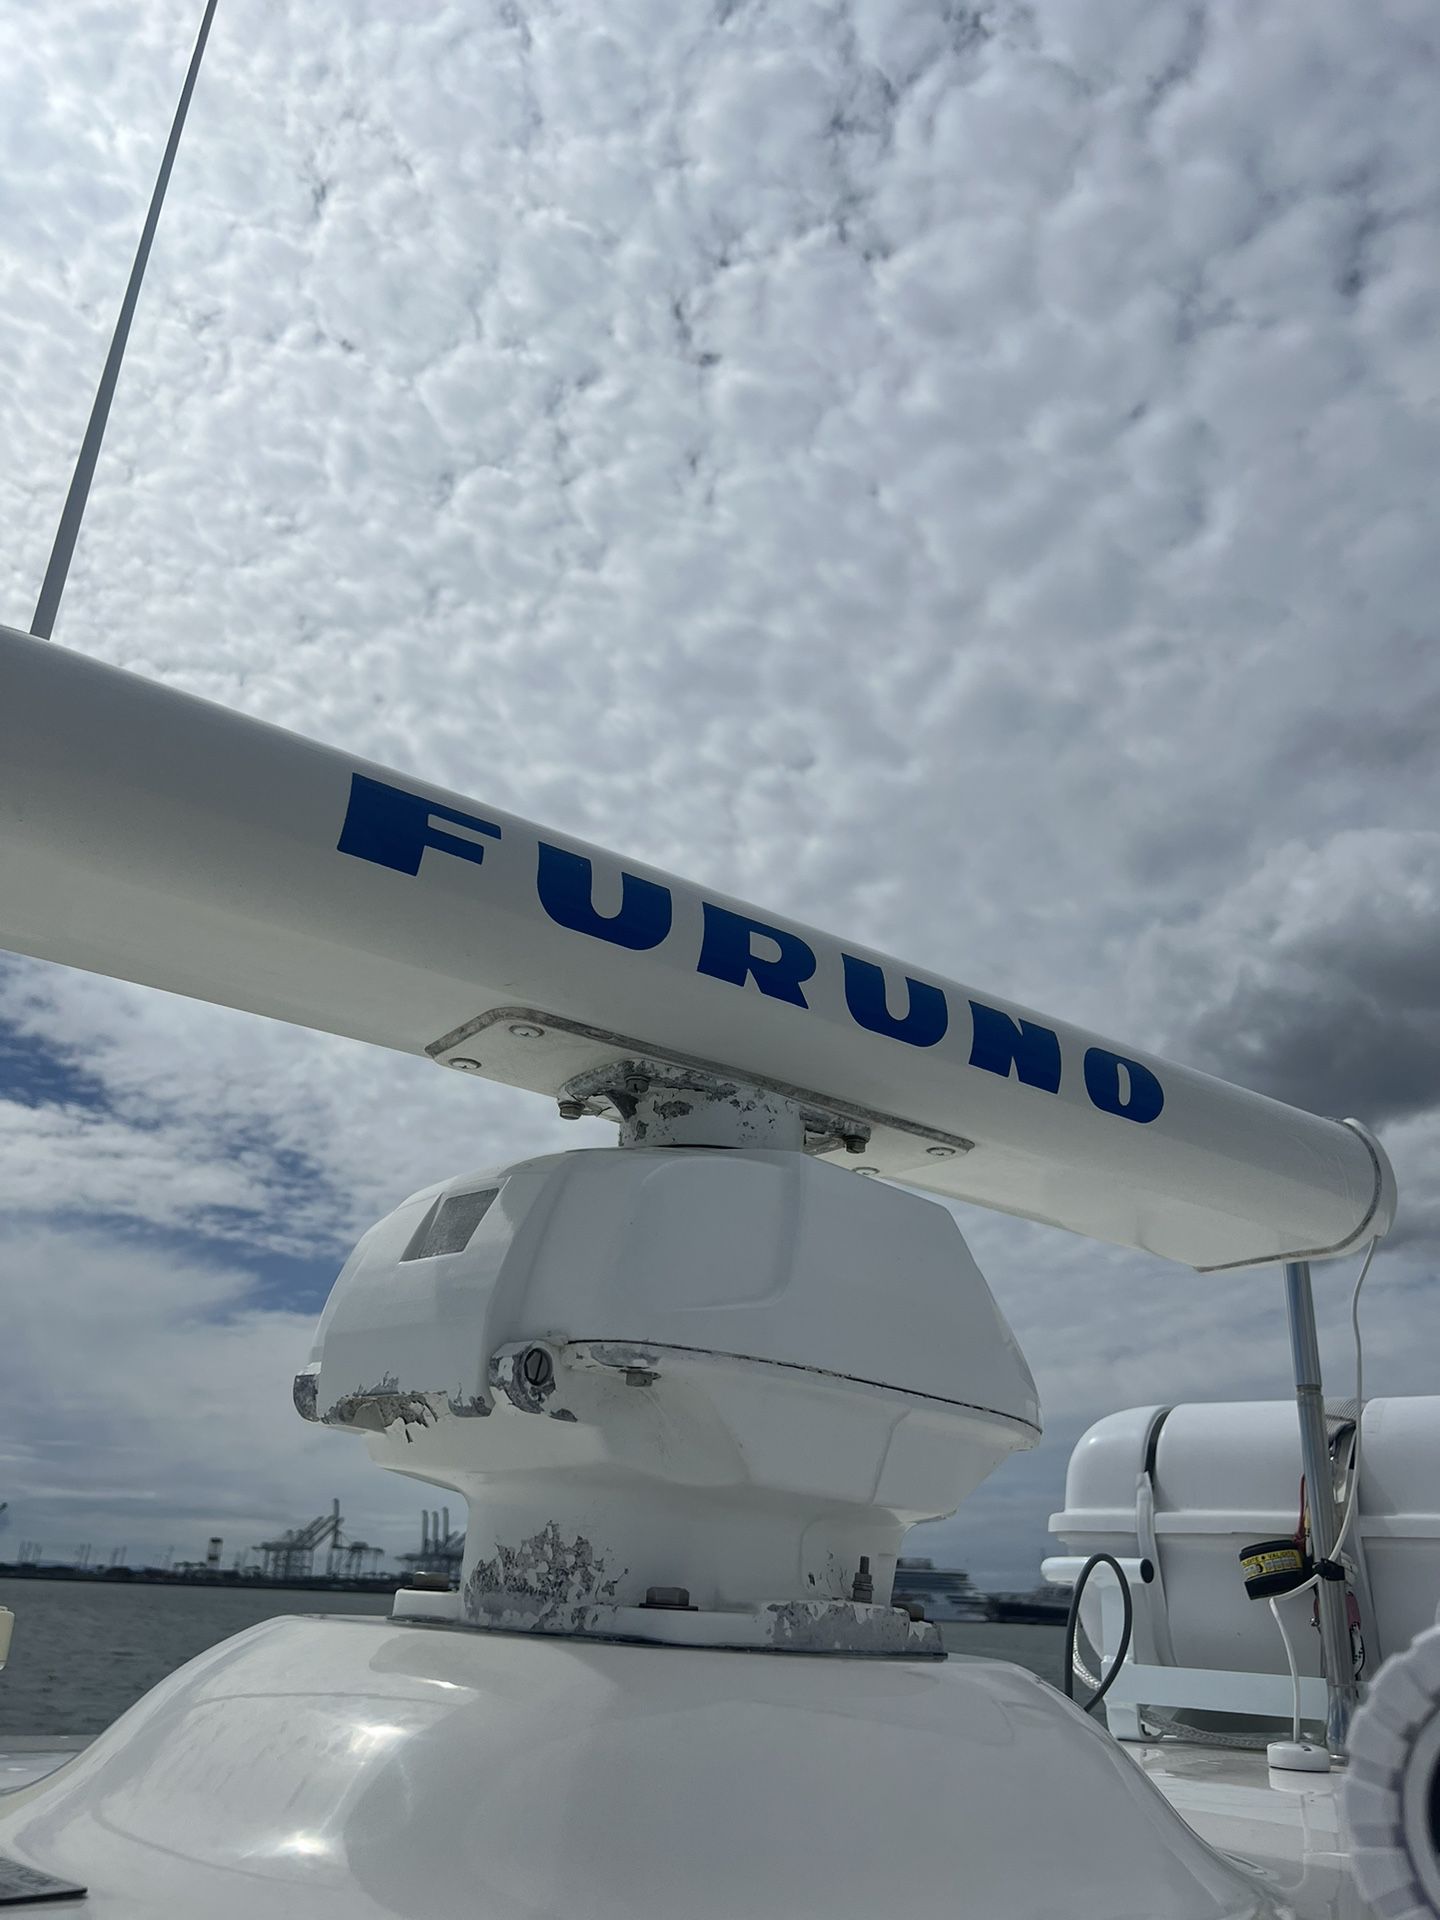 Furuno Radar And Navnet Displays (2)